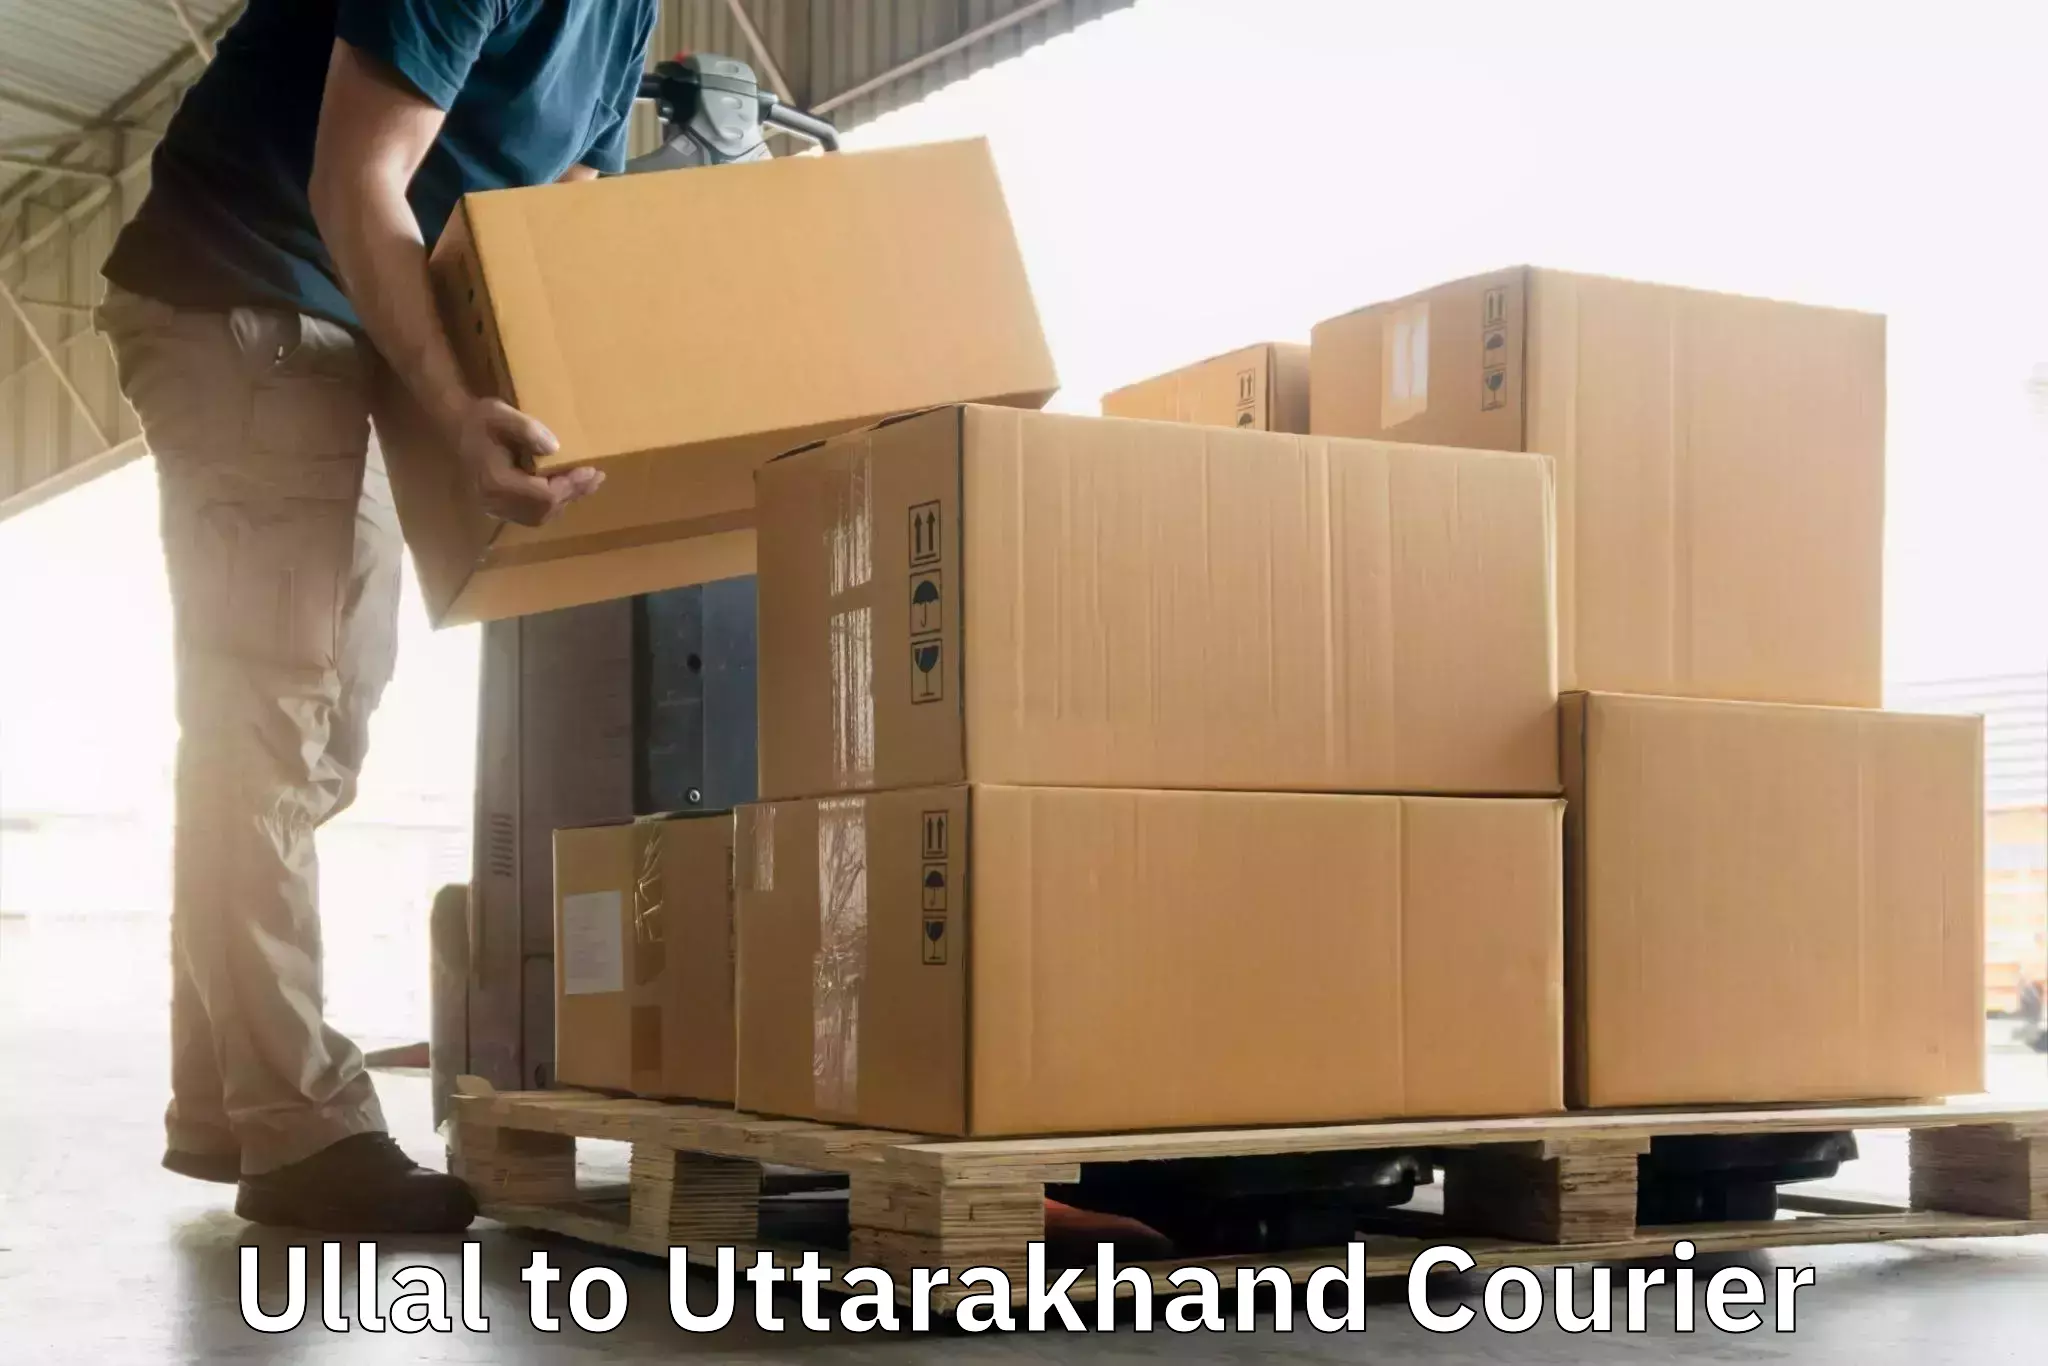 Global logistics network Ullal to Pithoragarh